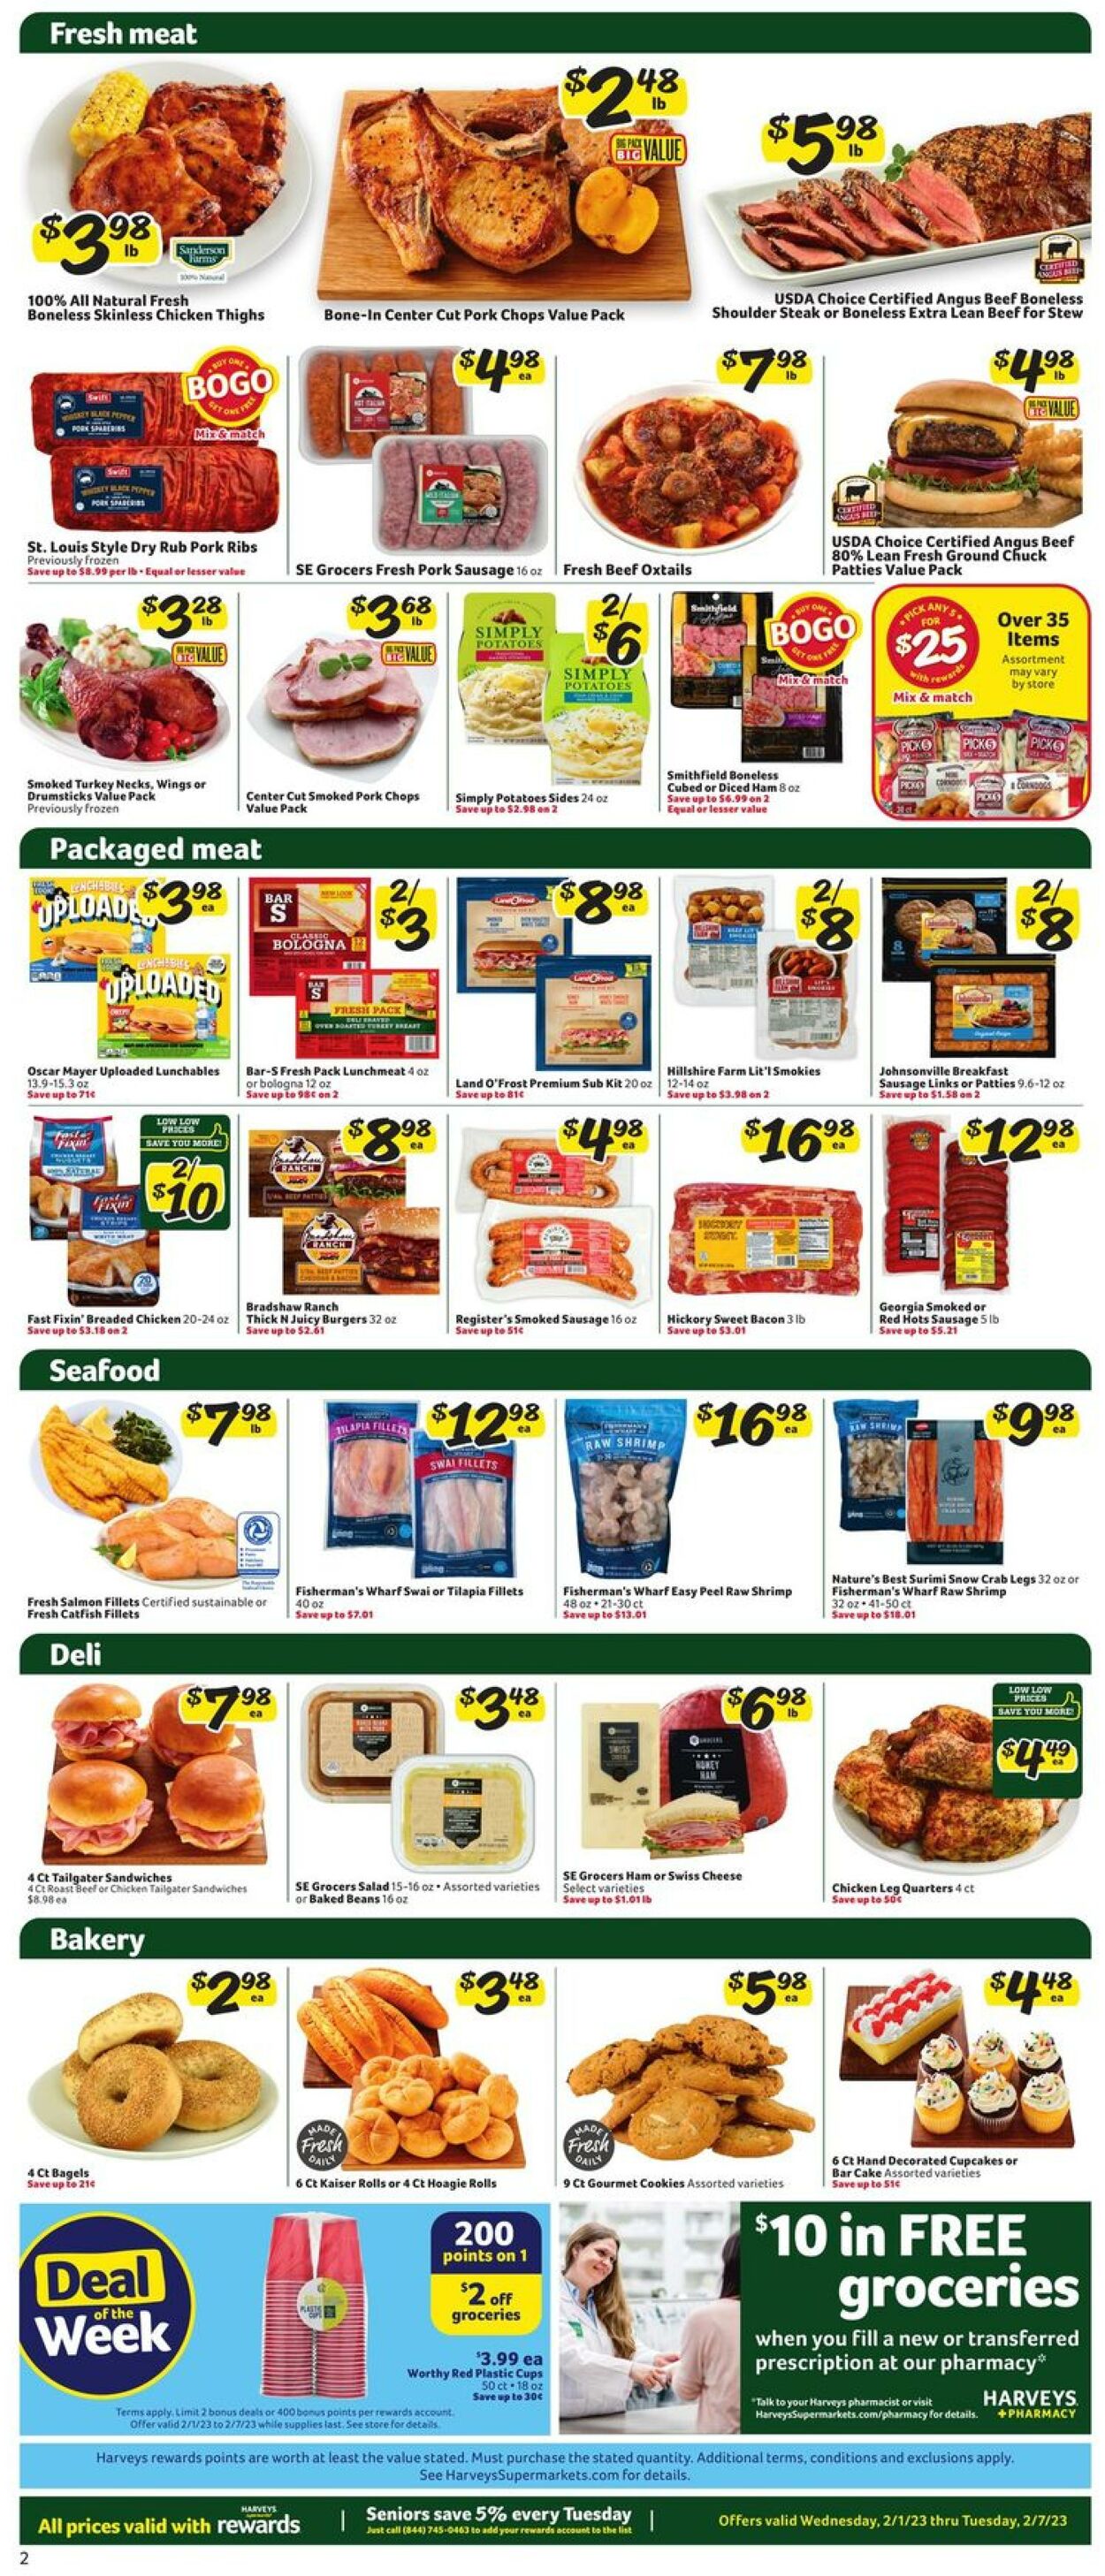 Weekly ad Harvey's Supermarkets 02/01/2023 - 02/07/2023